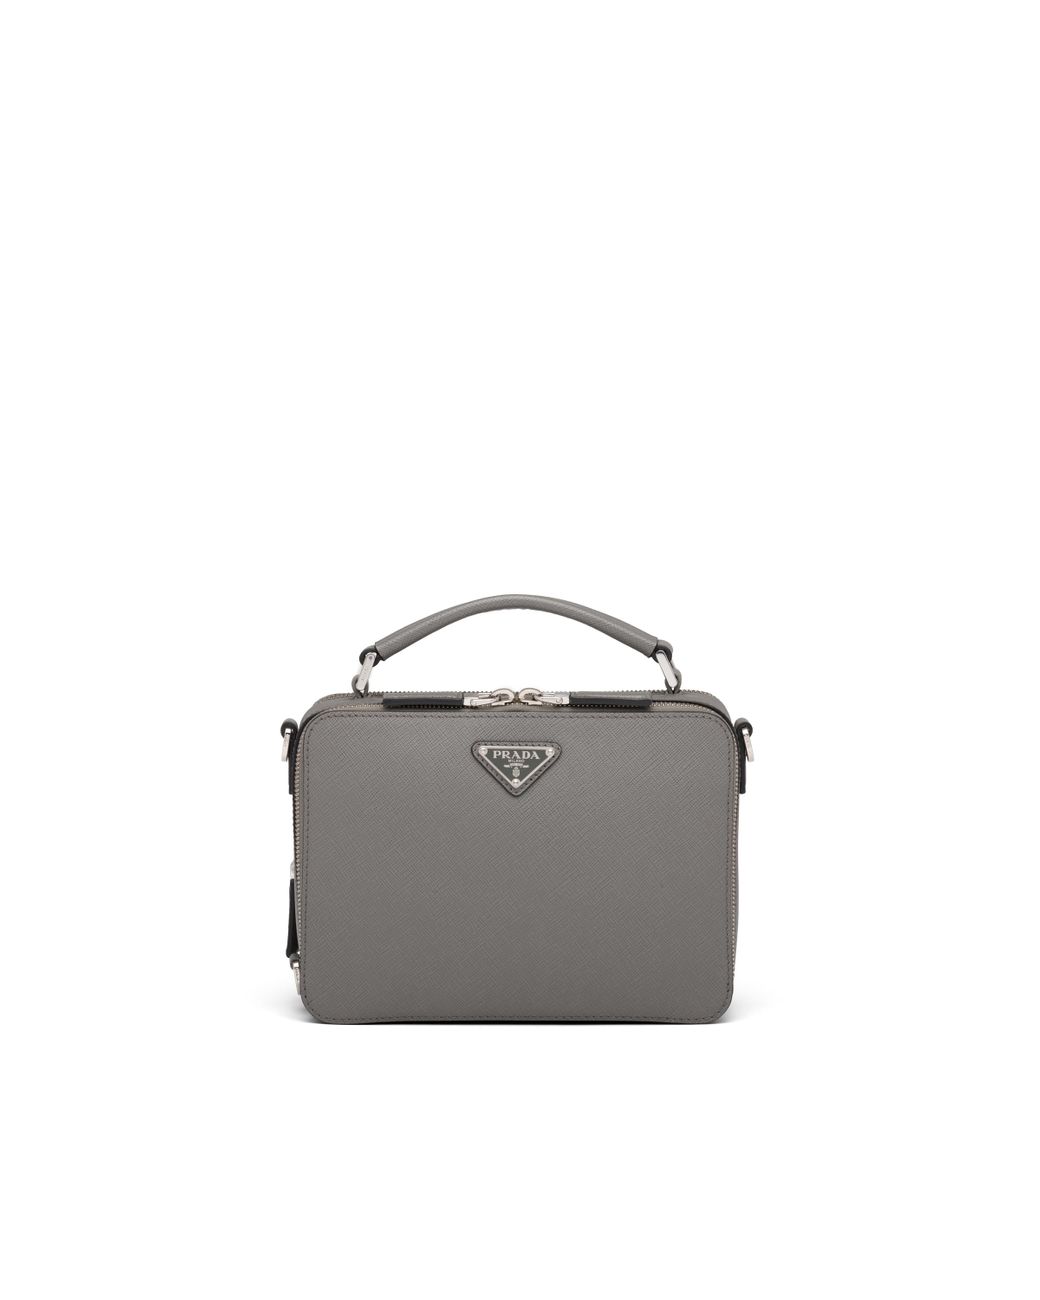 Platinum Prada Brique Saffiano Leather Bag